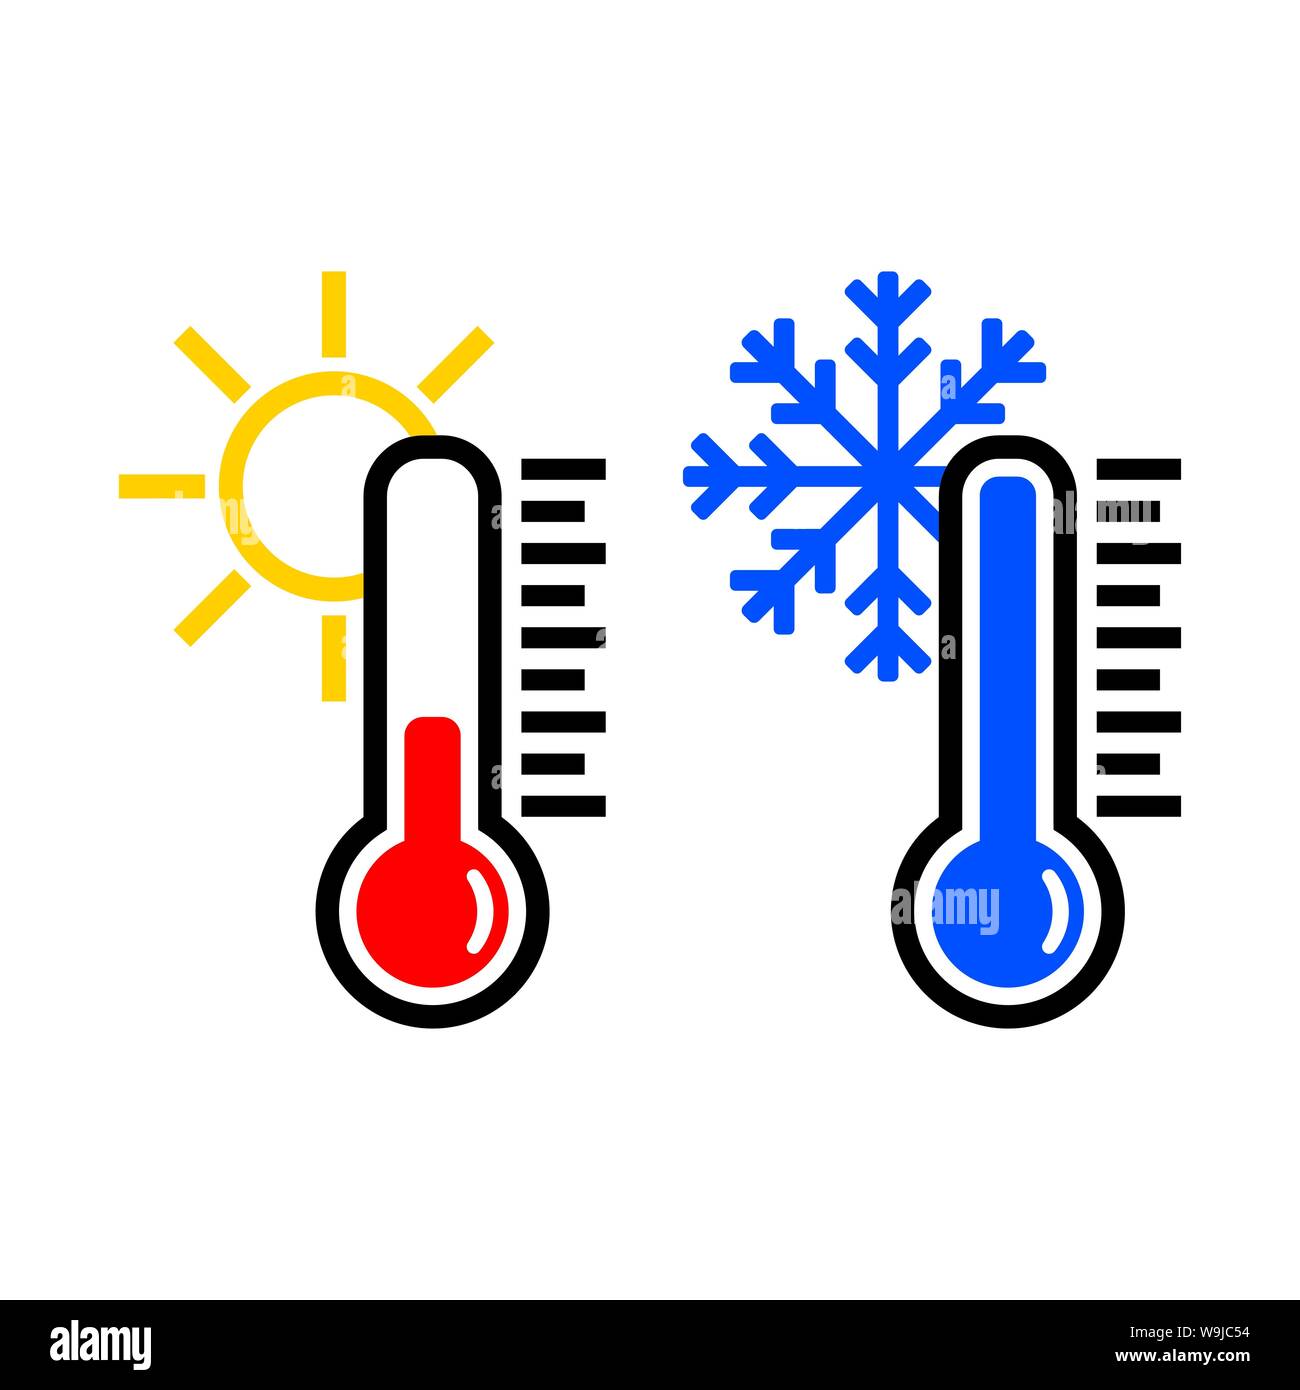 https://c8.alamy.com/comp/W9JC54/thermometer-icon-or-temperature-symbol-or-emblem-W9JC54.jpg